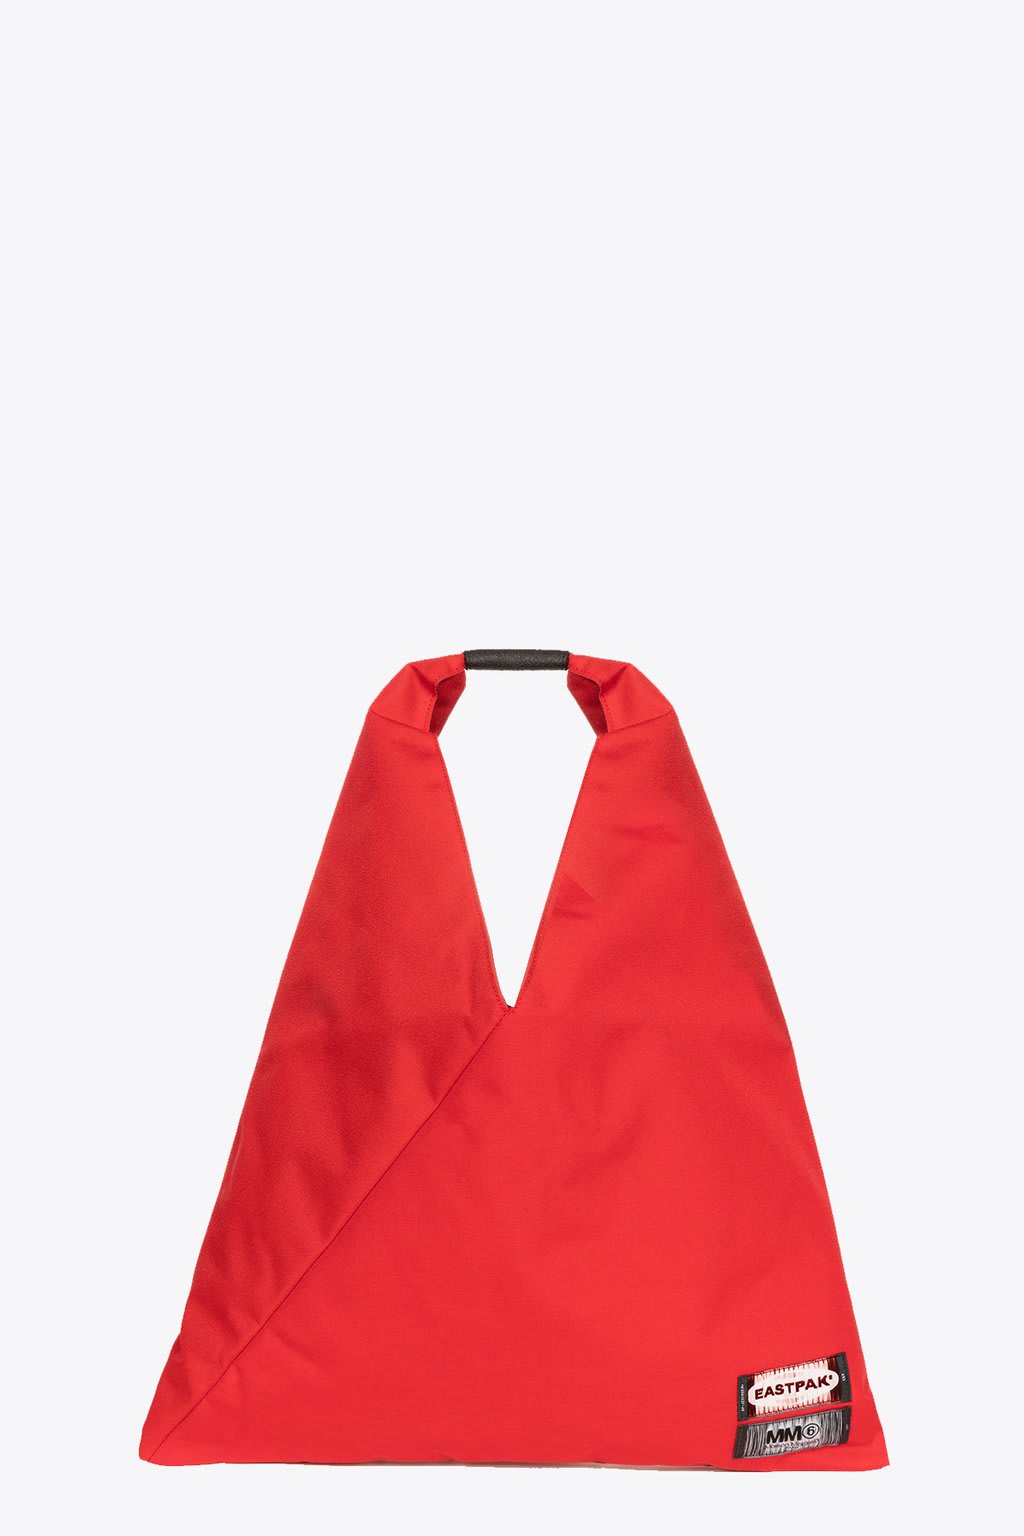 MM6 Maison Margiela Canvas Japanese Bag Red nylon Japanese bag Eastpak collaboration